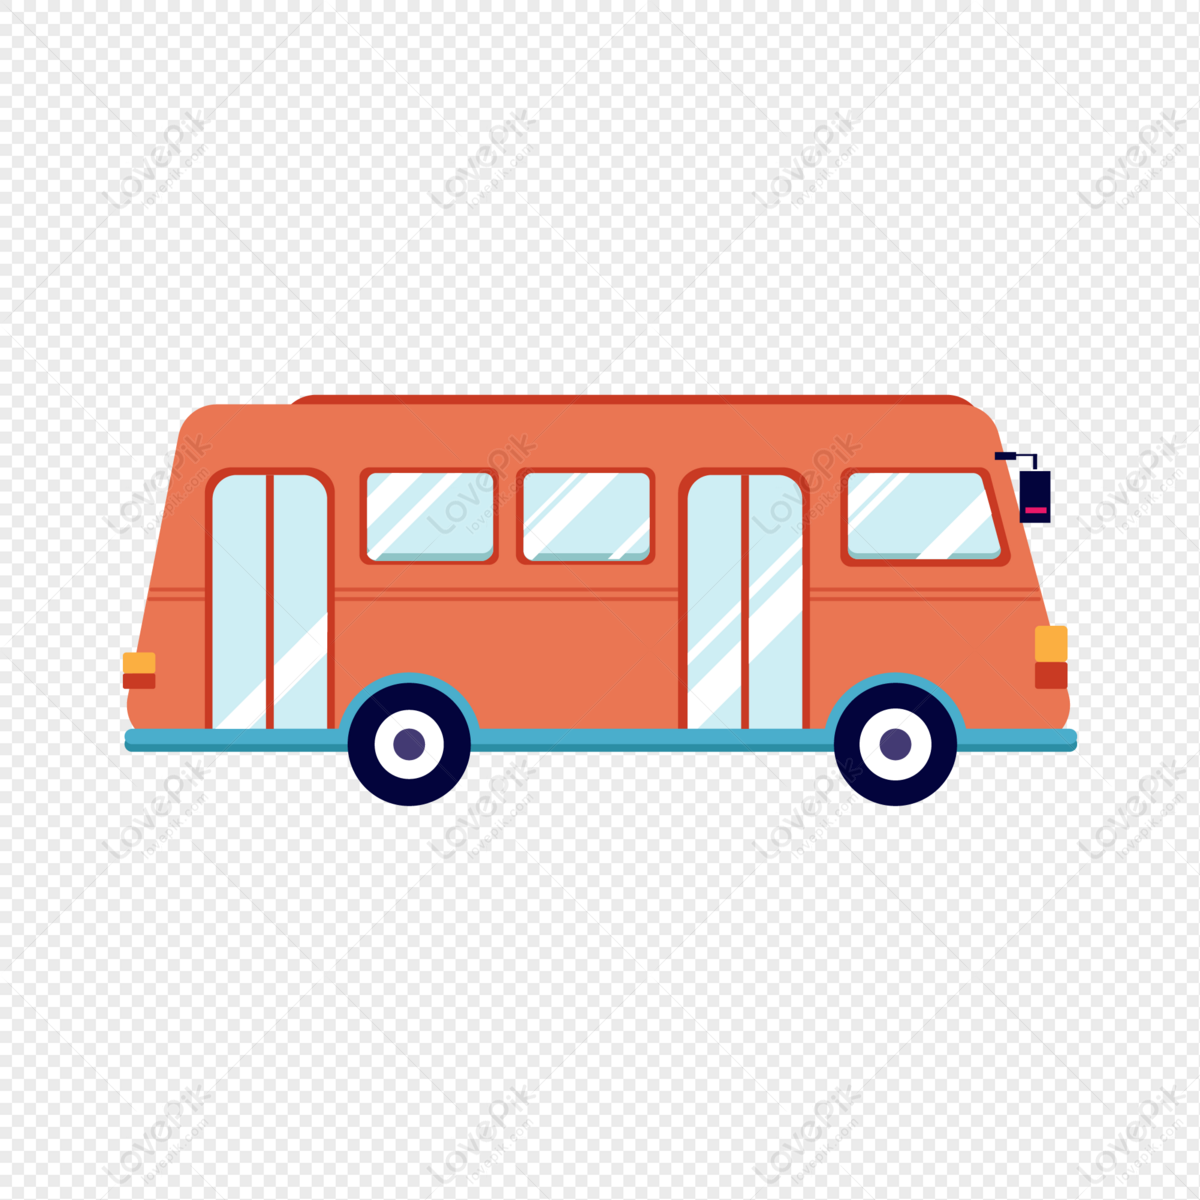 The Magic School Bus Logo PNG Transparent – Brands Logos